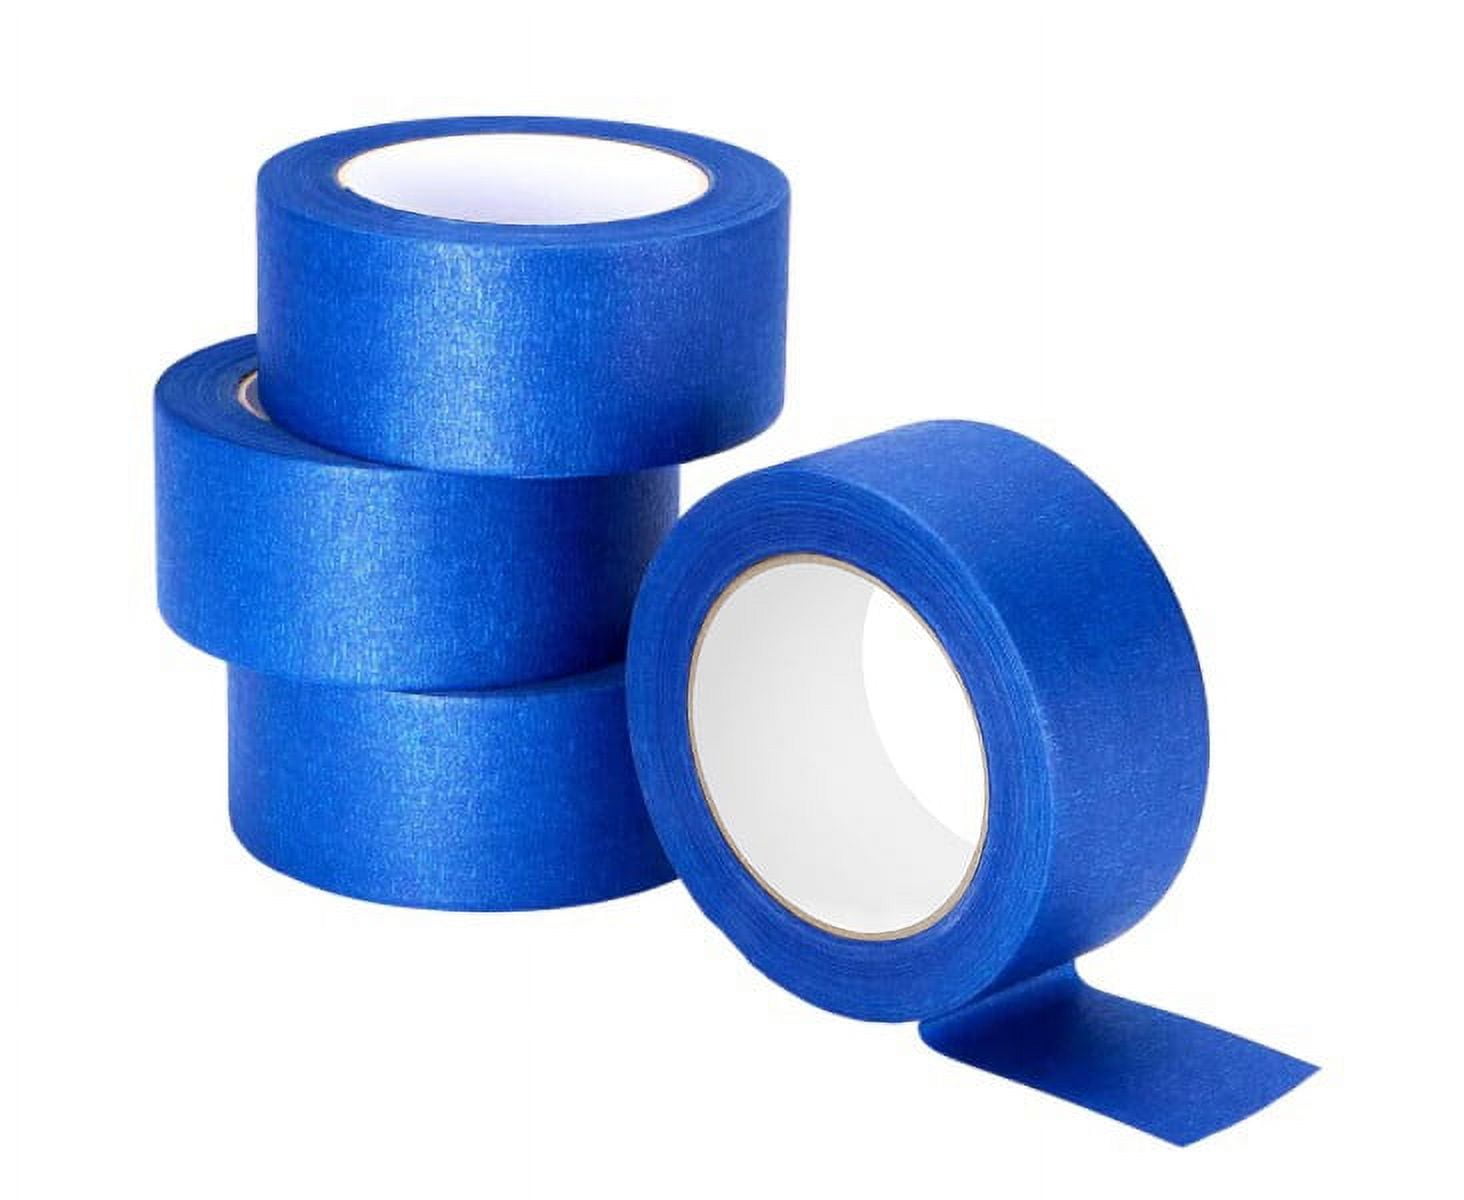 Leopcito Blue Painters Tape 2 inches Wide, Bulk 4 Pack Original